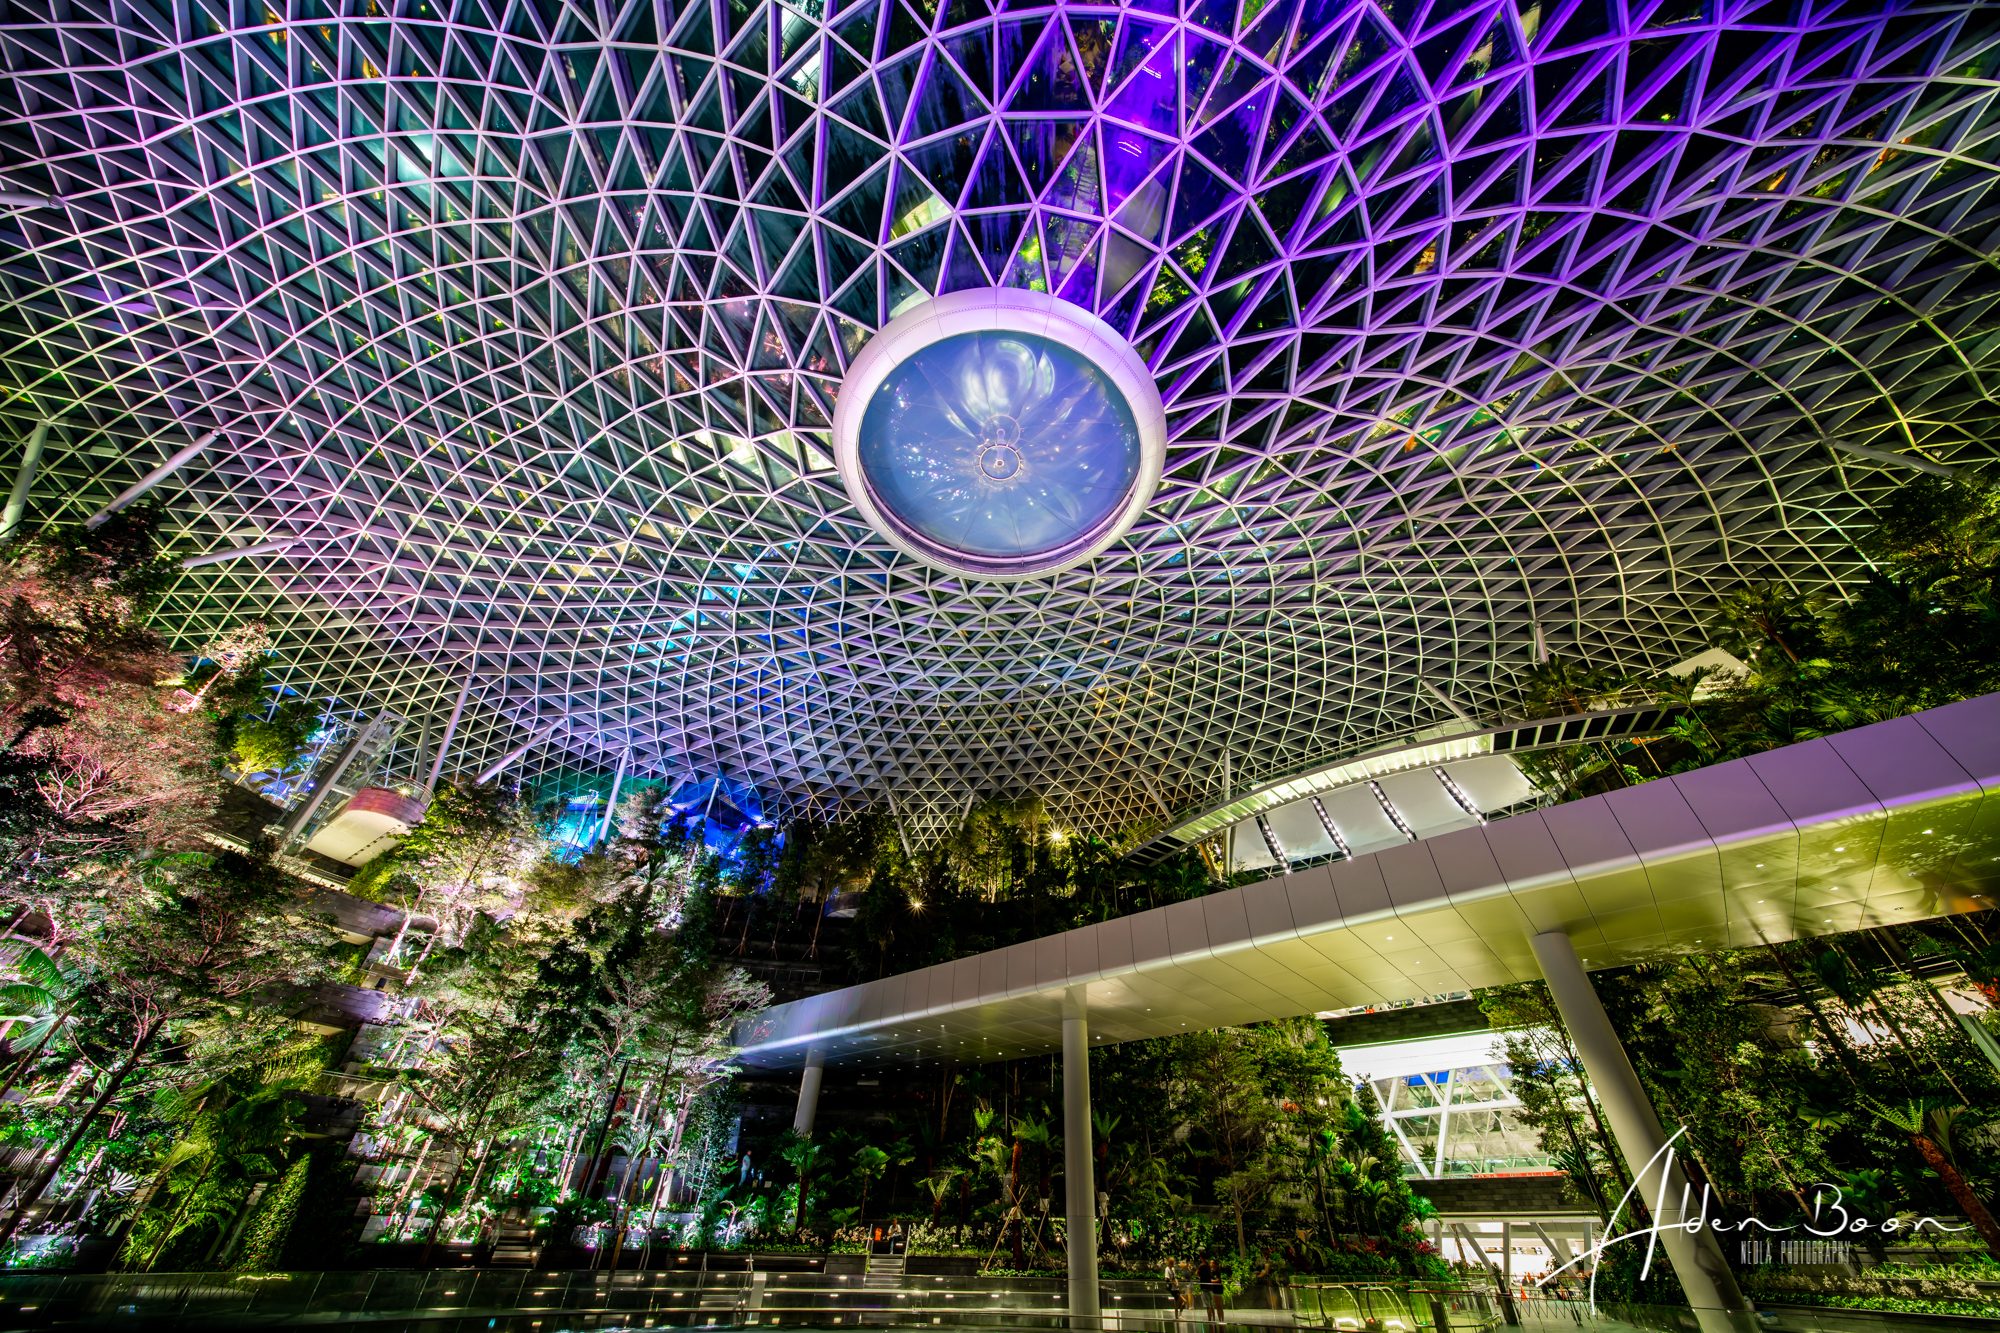 Jewel Changi Airport HSBC Rain Vortex, Toroid Glass-and-steel Ceiling